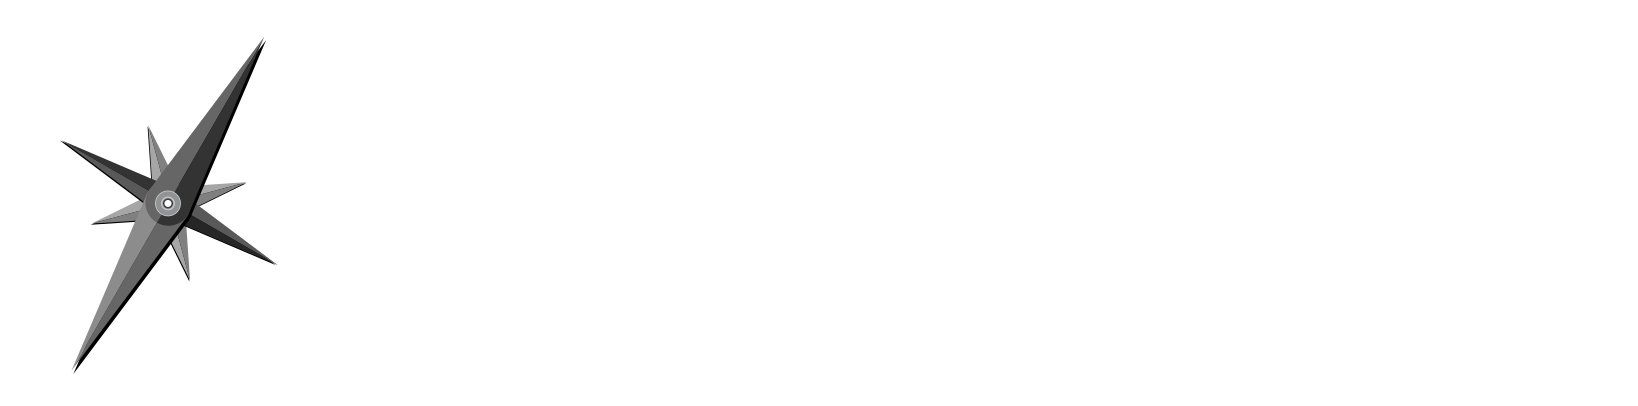 HOSPITALITY 360